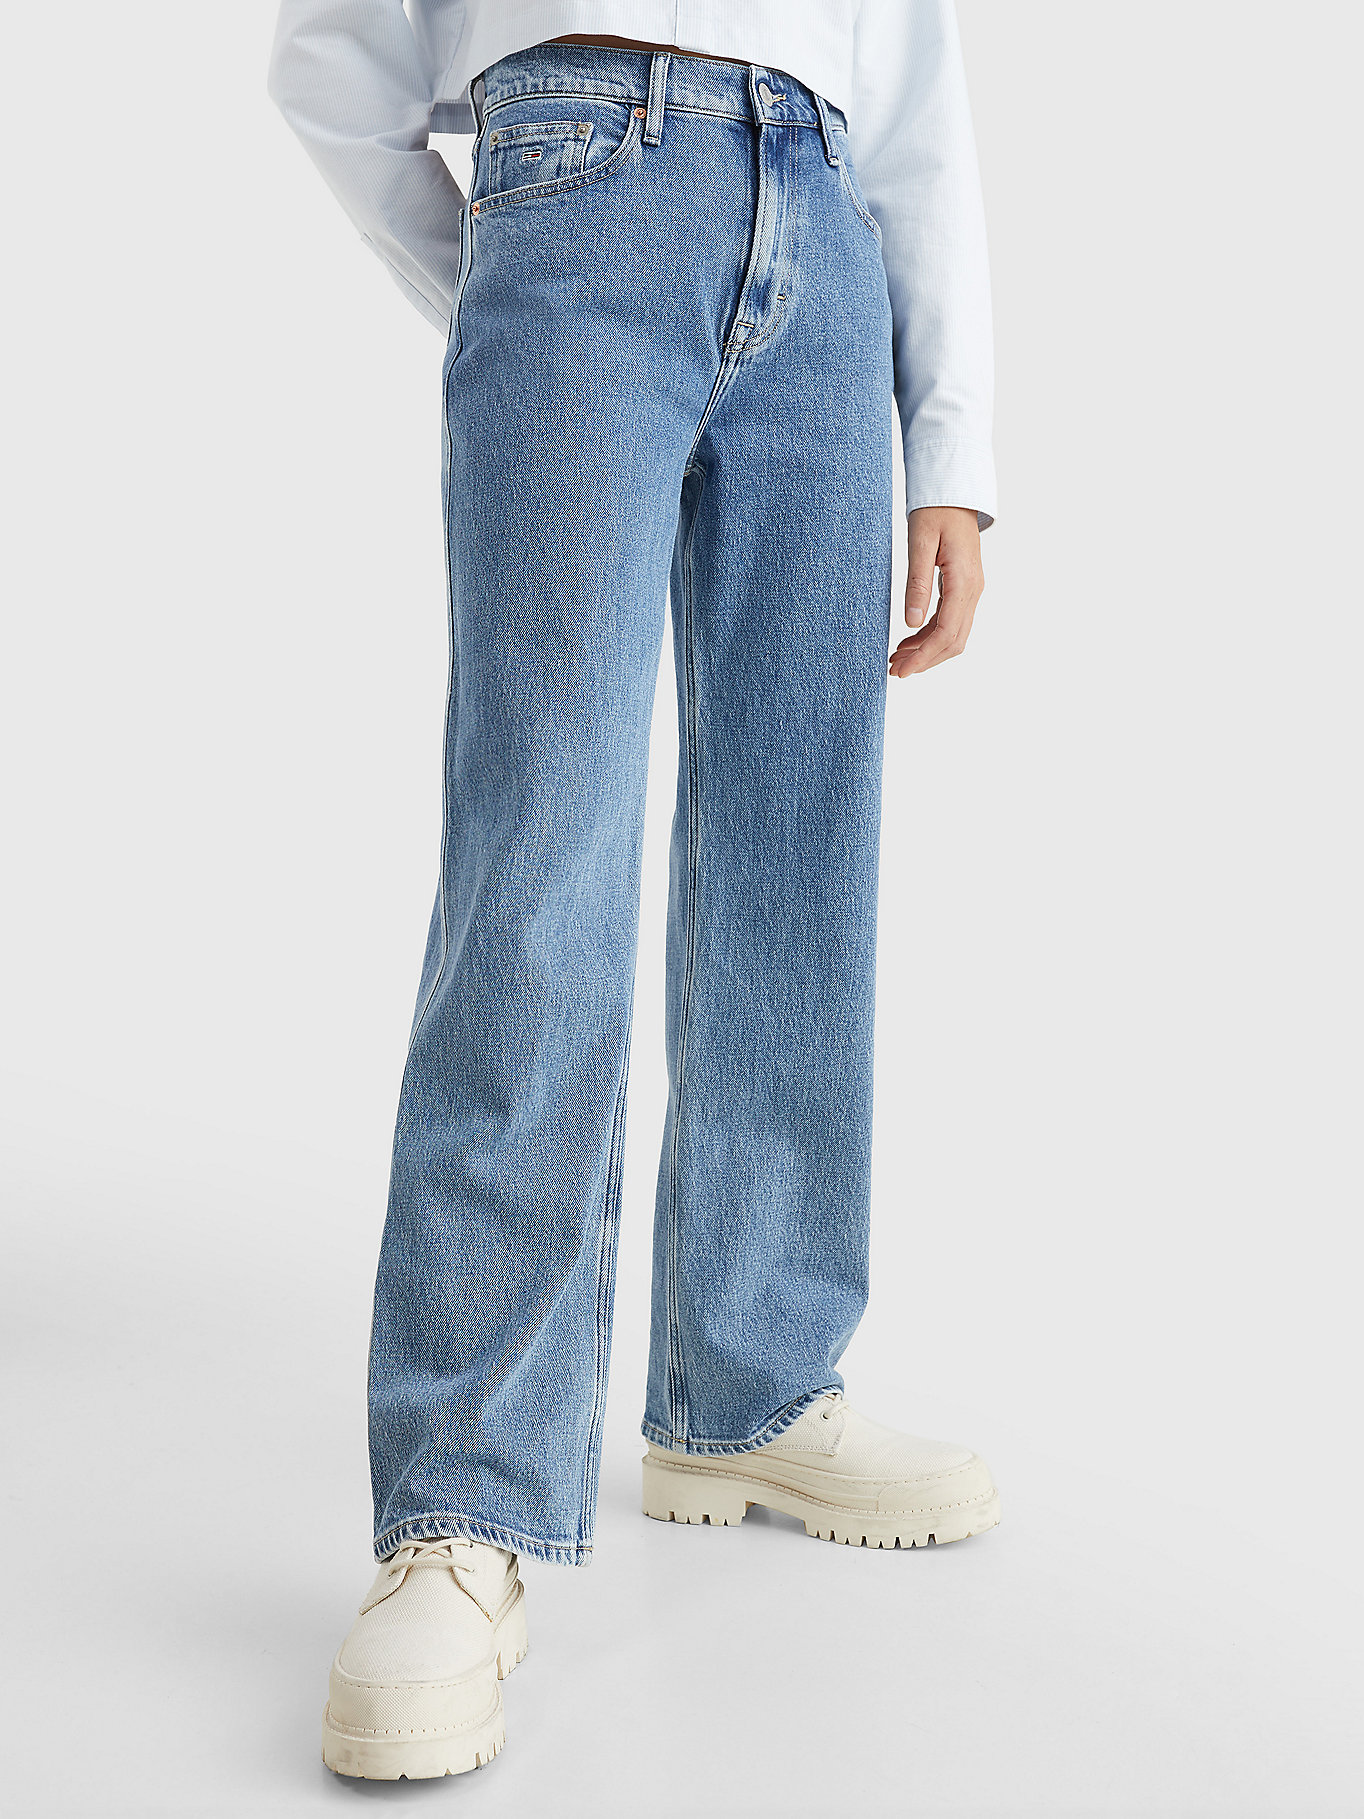 Vervagen Hoopvol gesmolten Betsy medium rise jeans met wijde fit | DENIM | Tommy Hilfiger